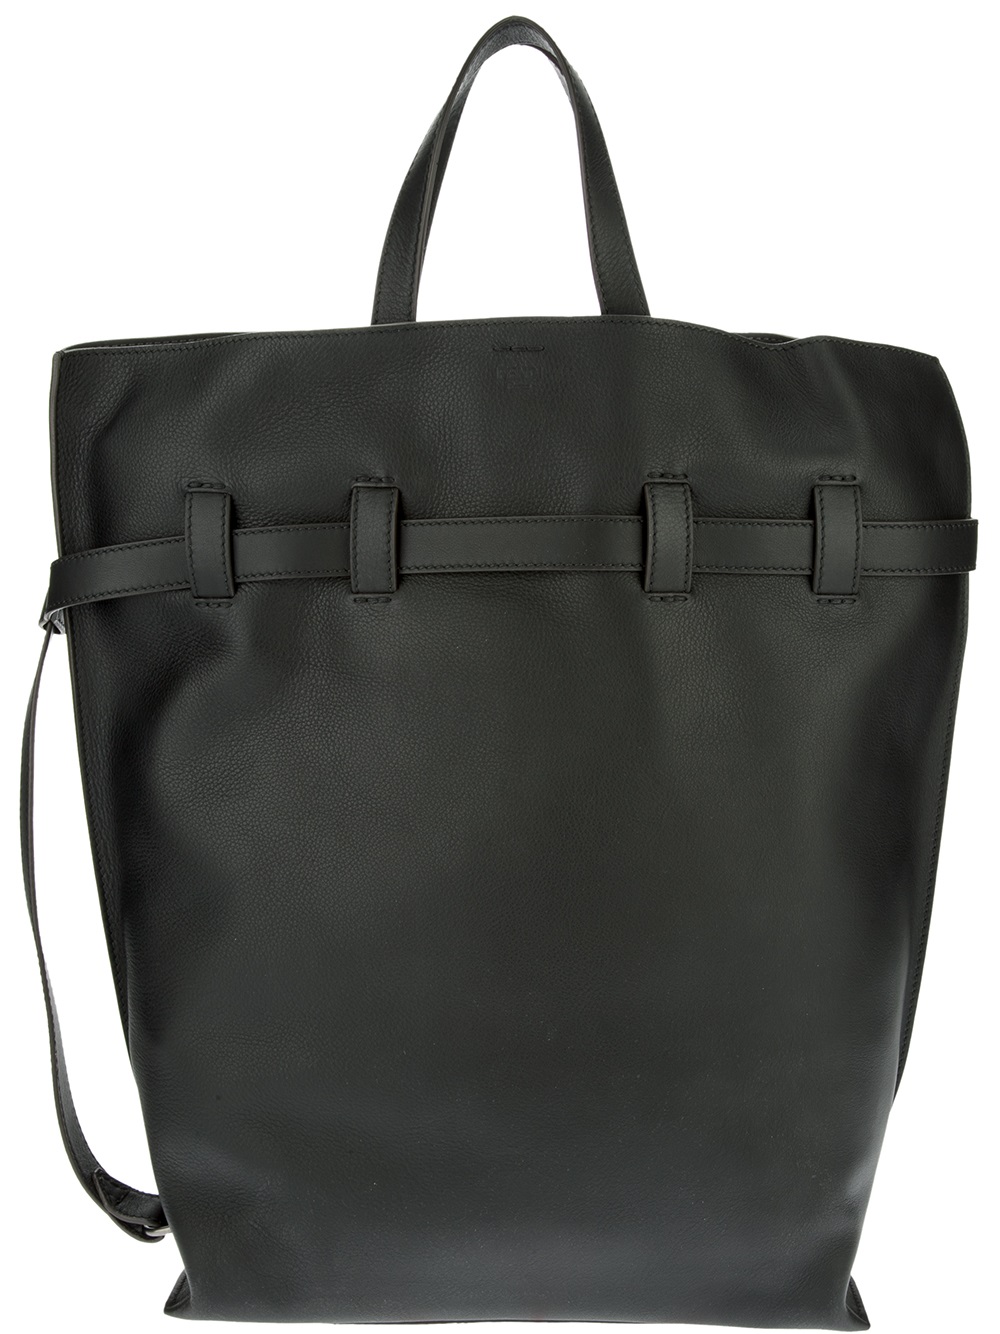 Fendi Tote Bag in Black for Men - Lyst